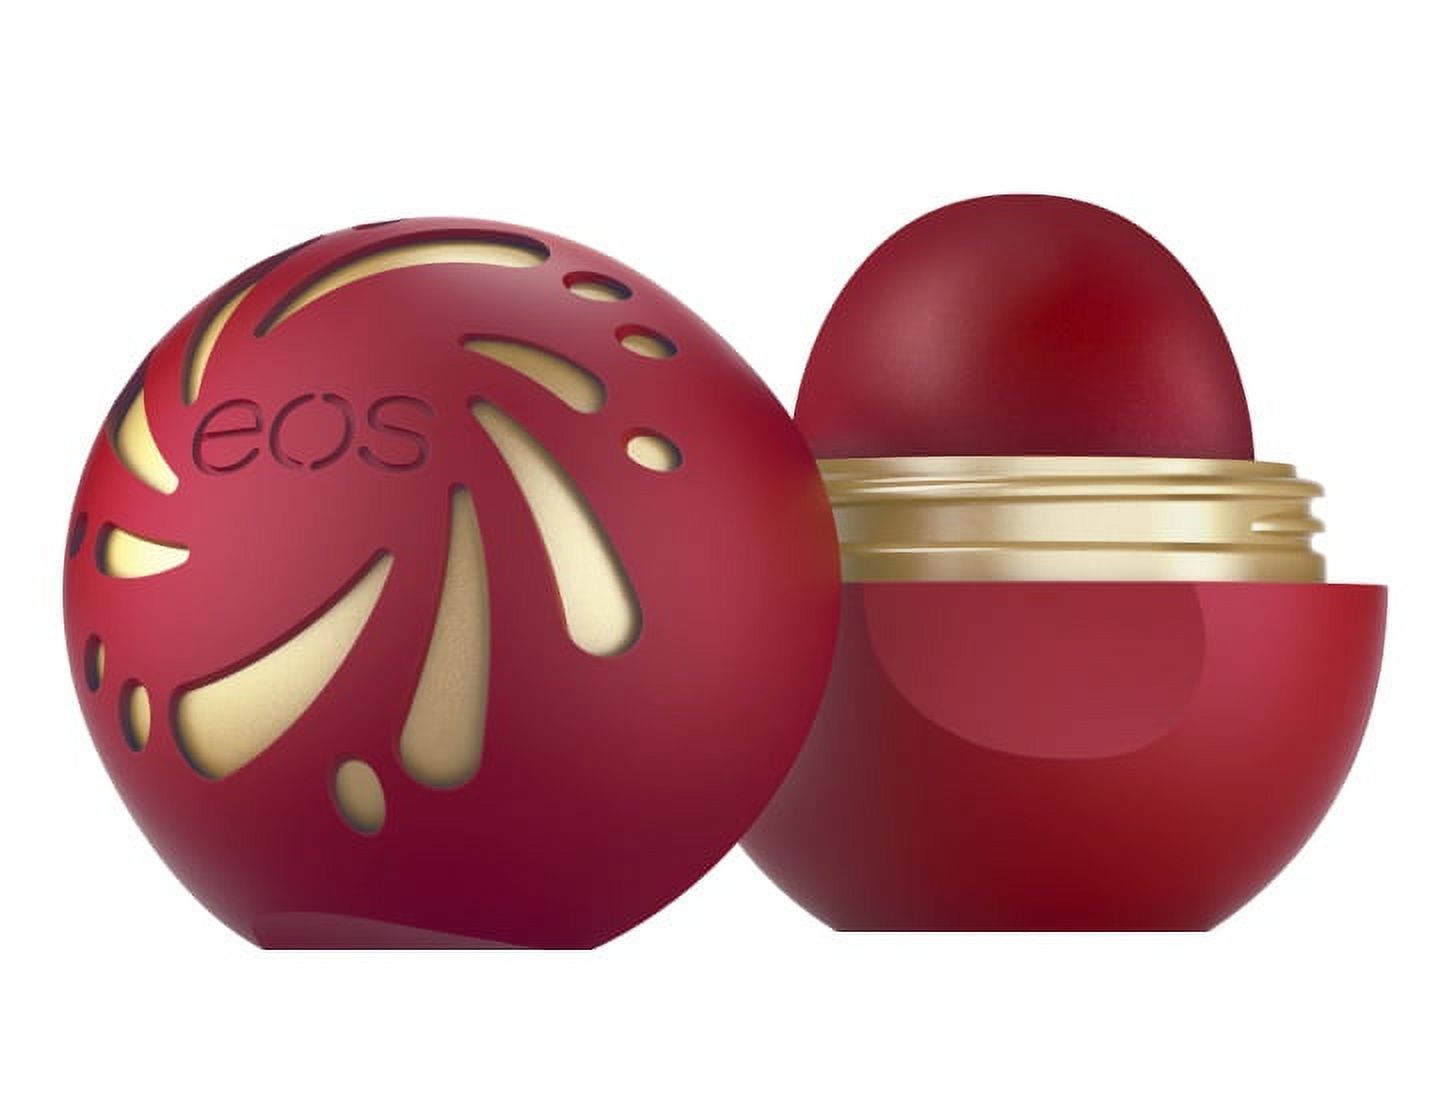 eos Mood Stones Lip Balm & Cheek Tint, Dazzling Ruby - image 1 of 5